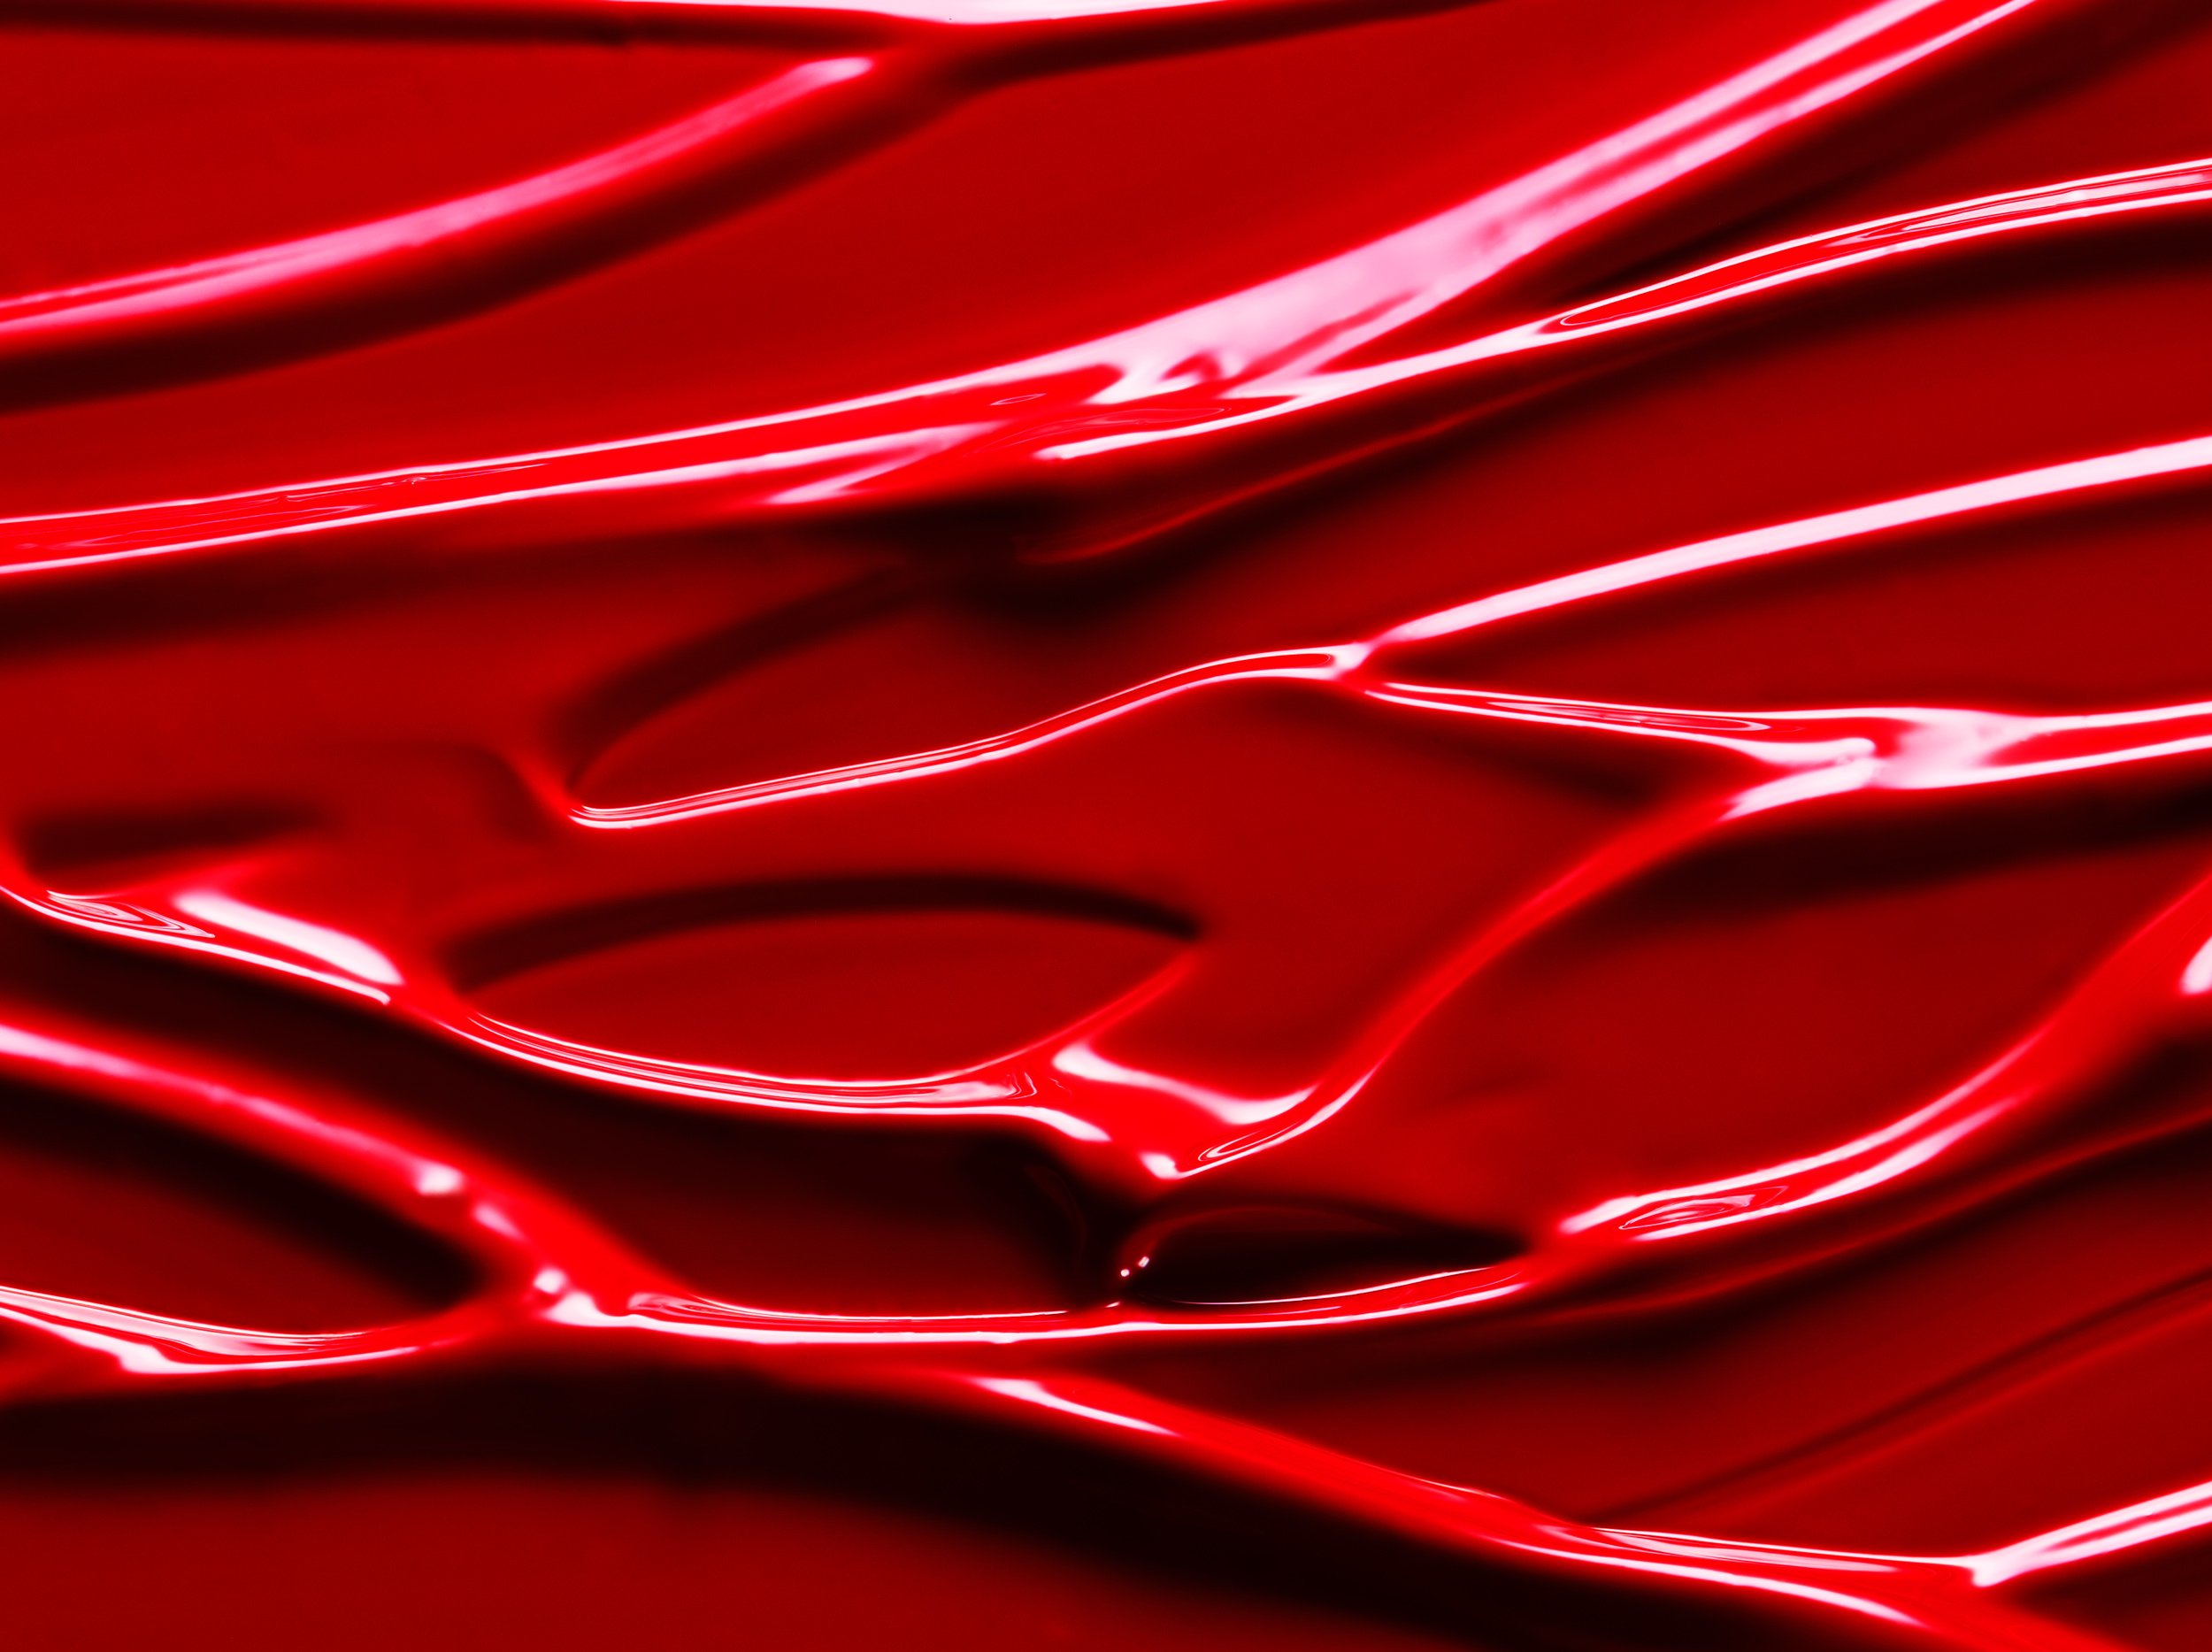 tidepool-BEAM-dan-simmons-liquid-red-lipstick-textures-cosmedics_closeup.jpeg